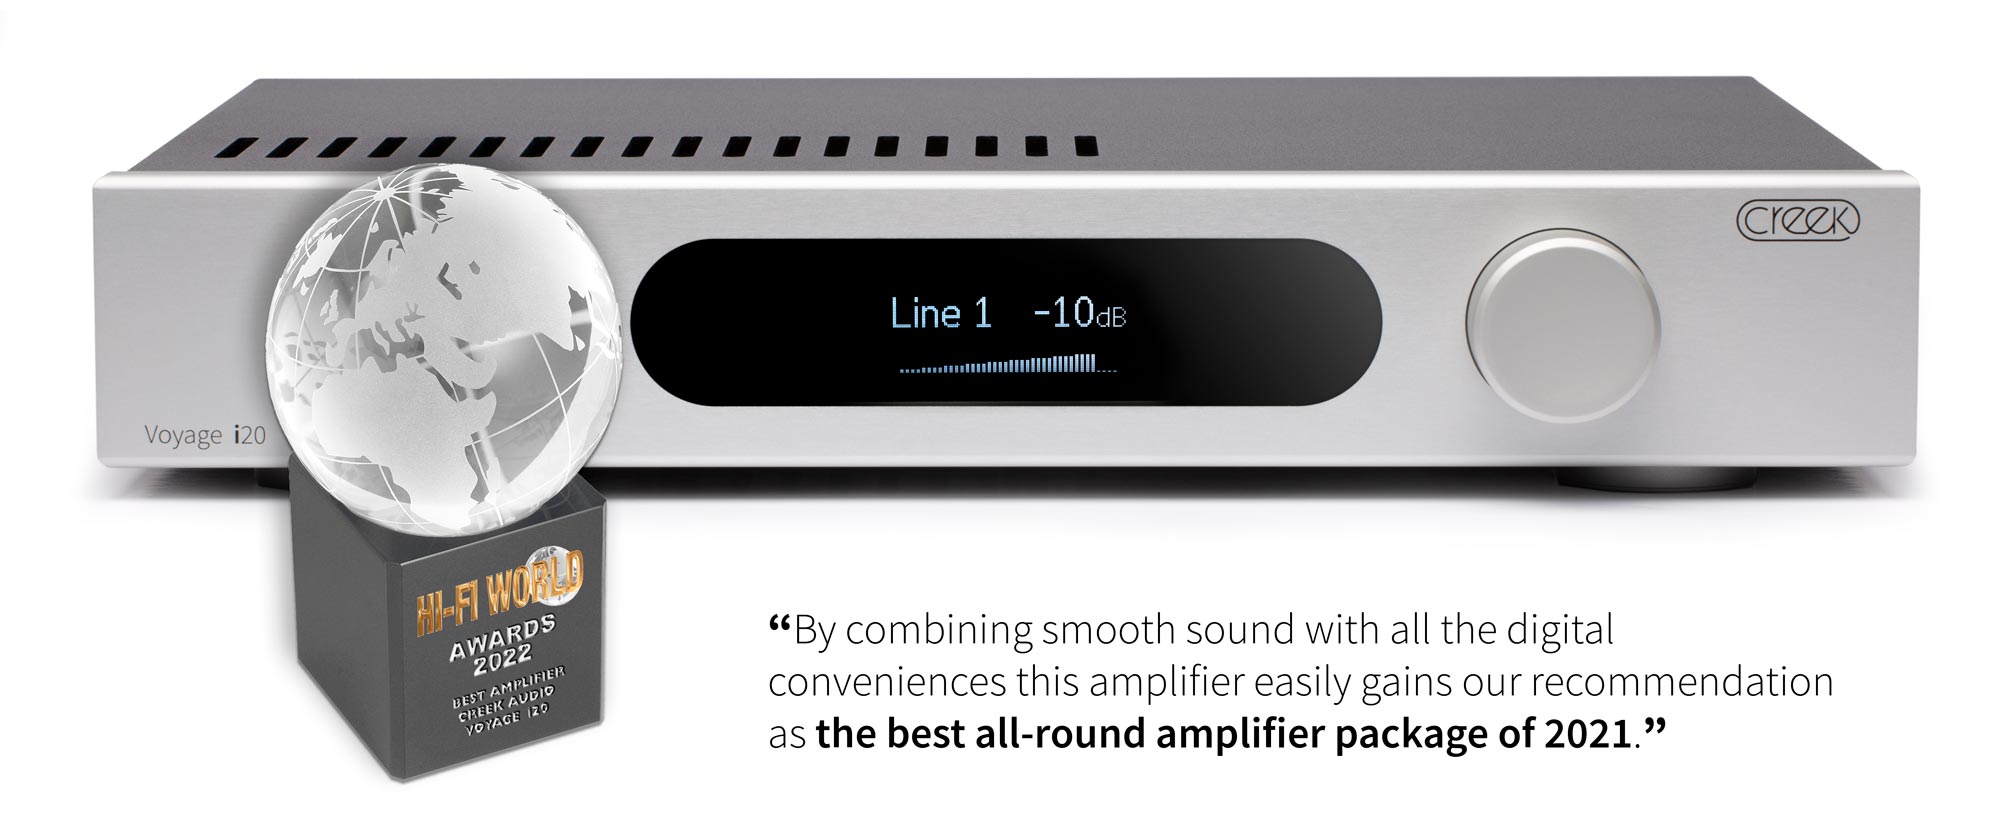 Hi-Fi World - Creek Audio Voyage i20 Best Amplifier of 2021